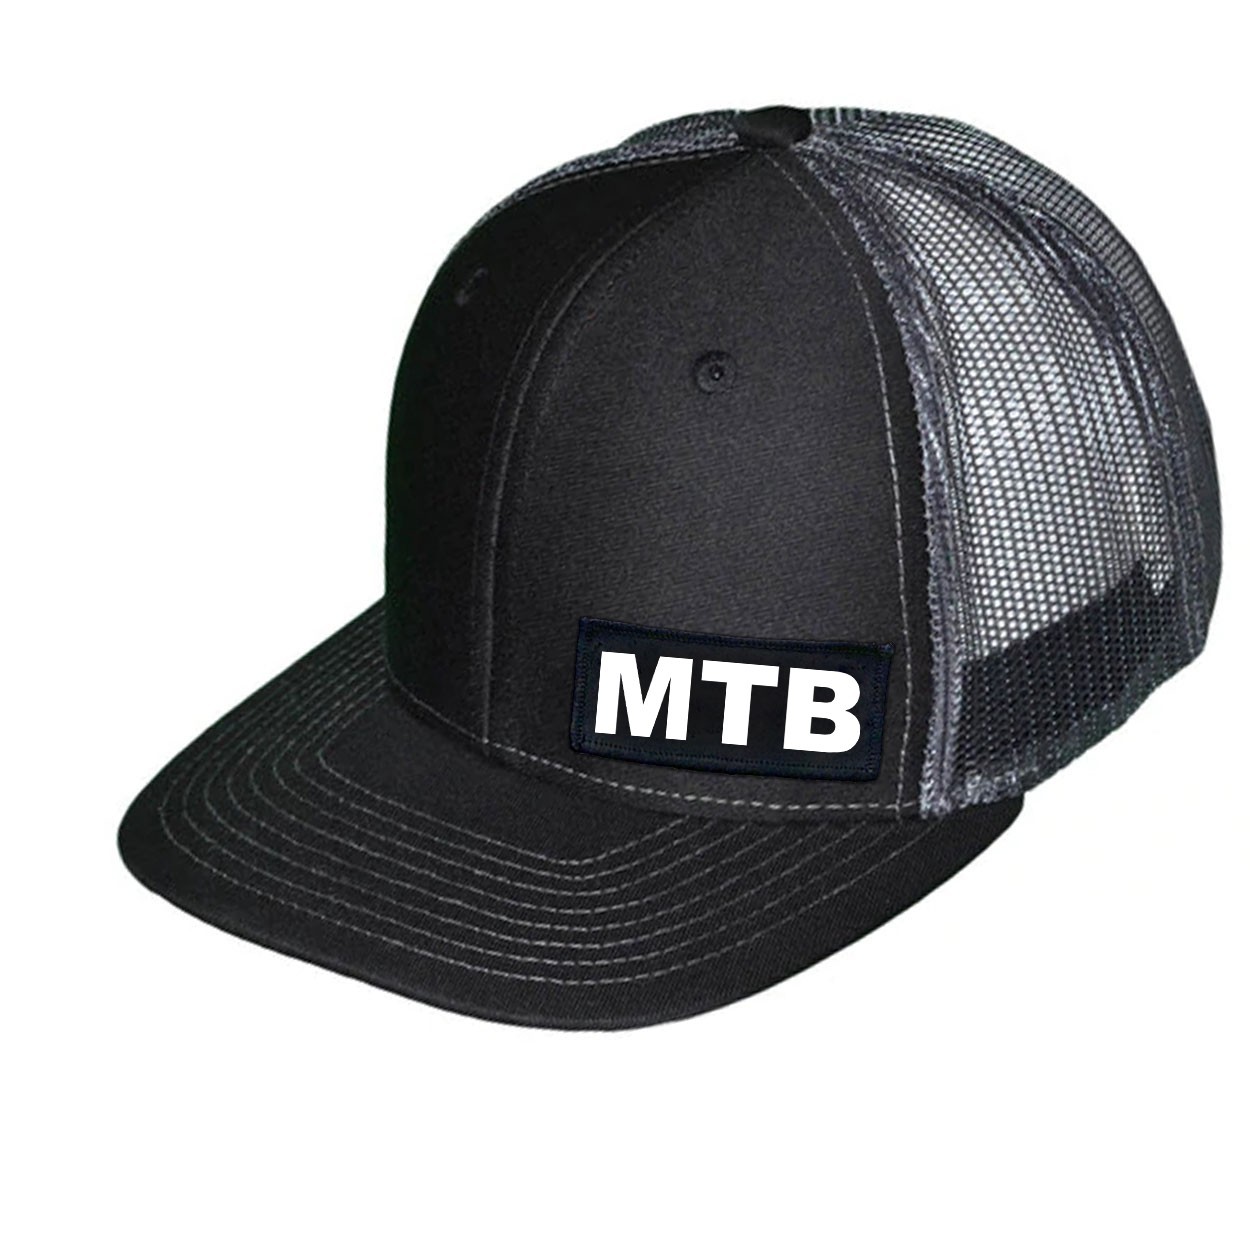 Mtb Brand Logo Night Out Woven Patch Snapback Trucker Hat Black/Gray